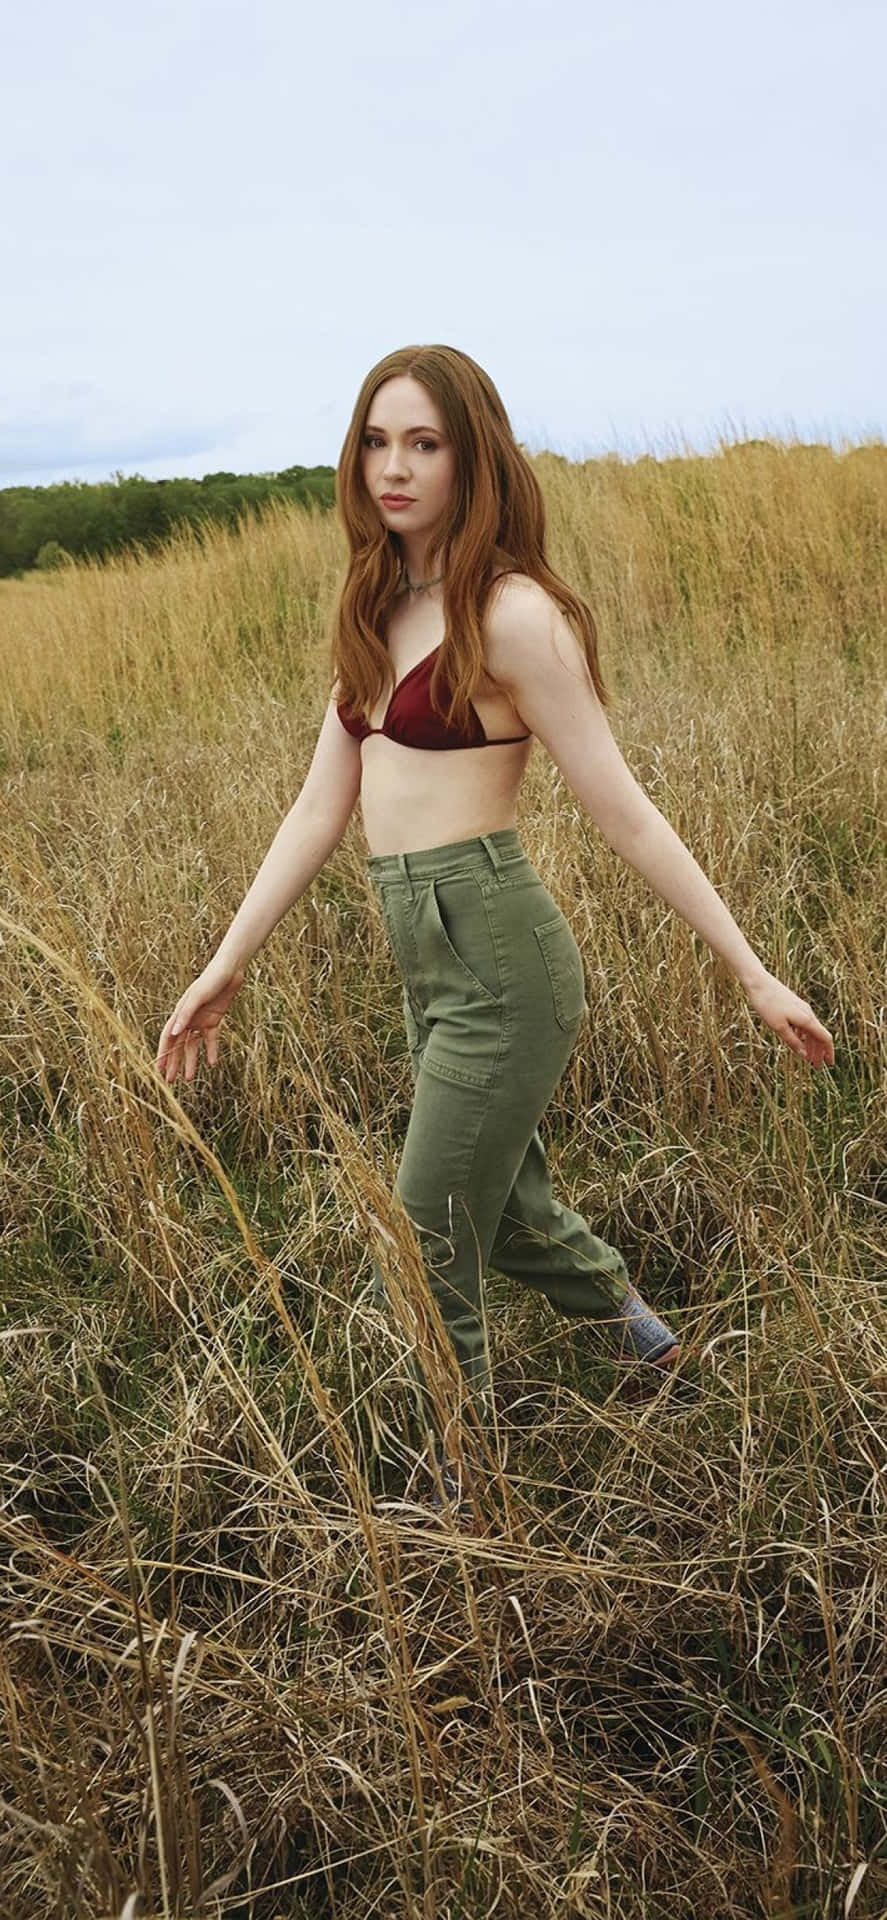 A Woman In A Bikini Standing In A Field